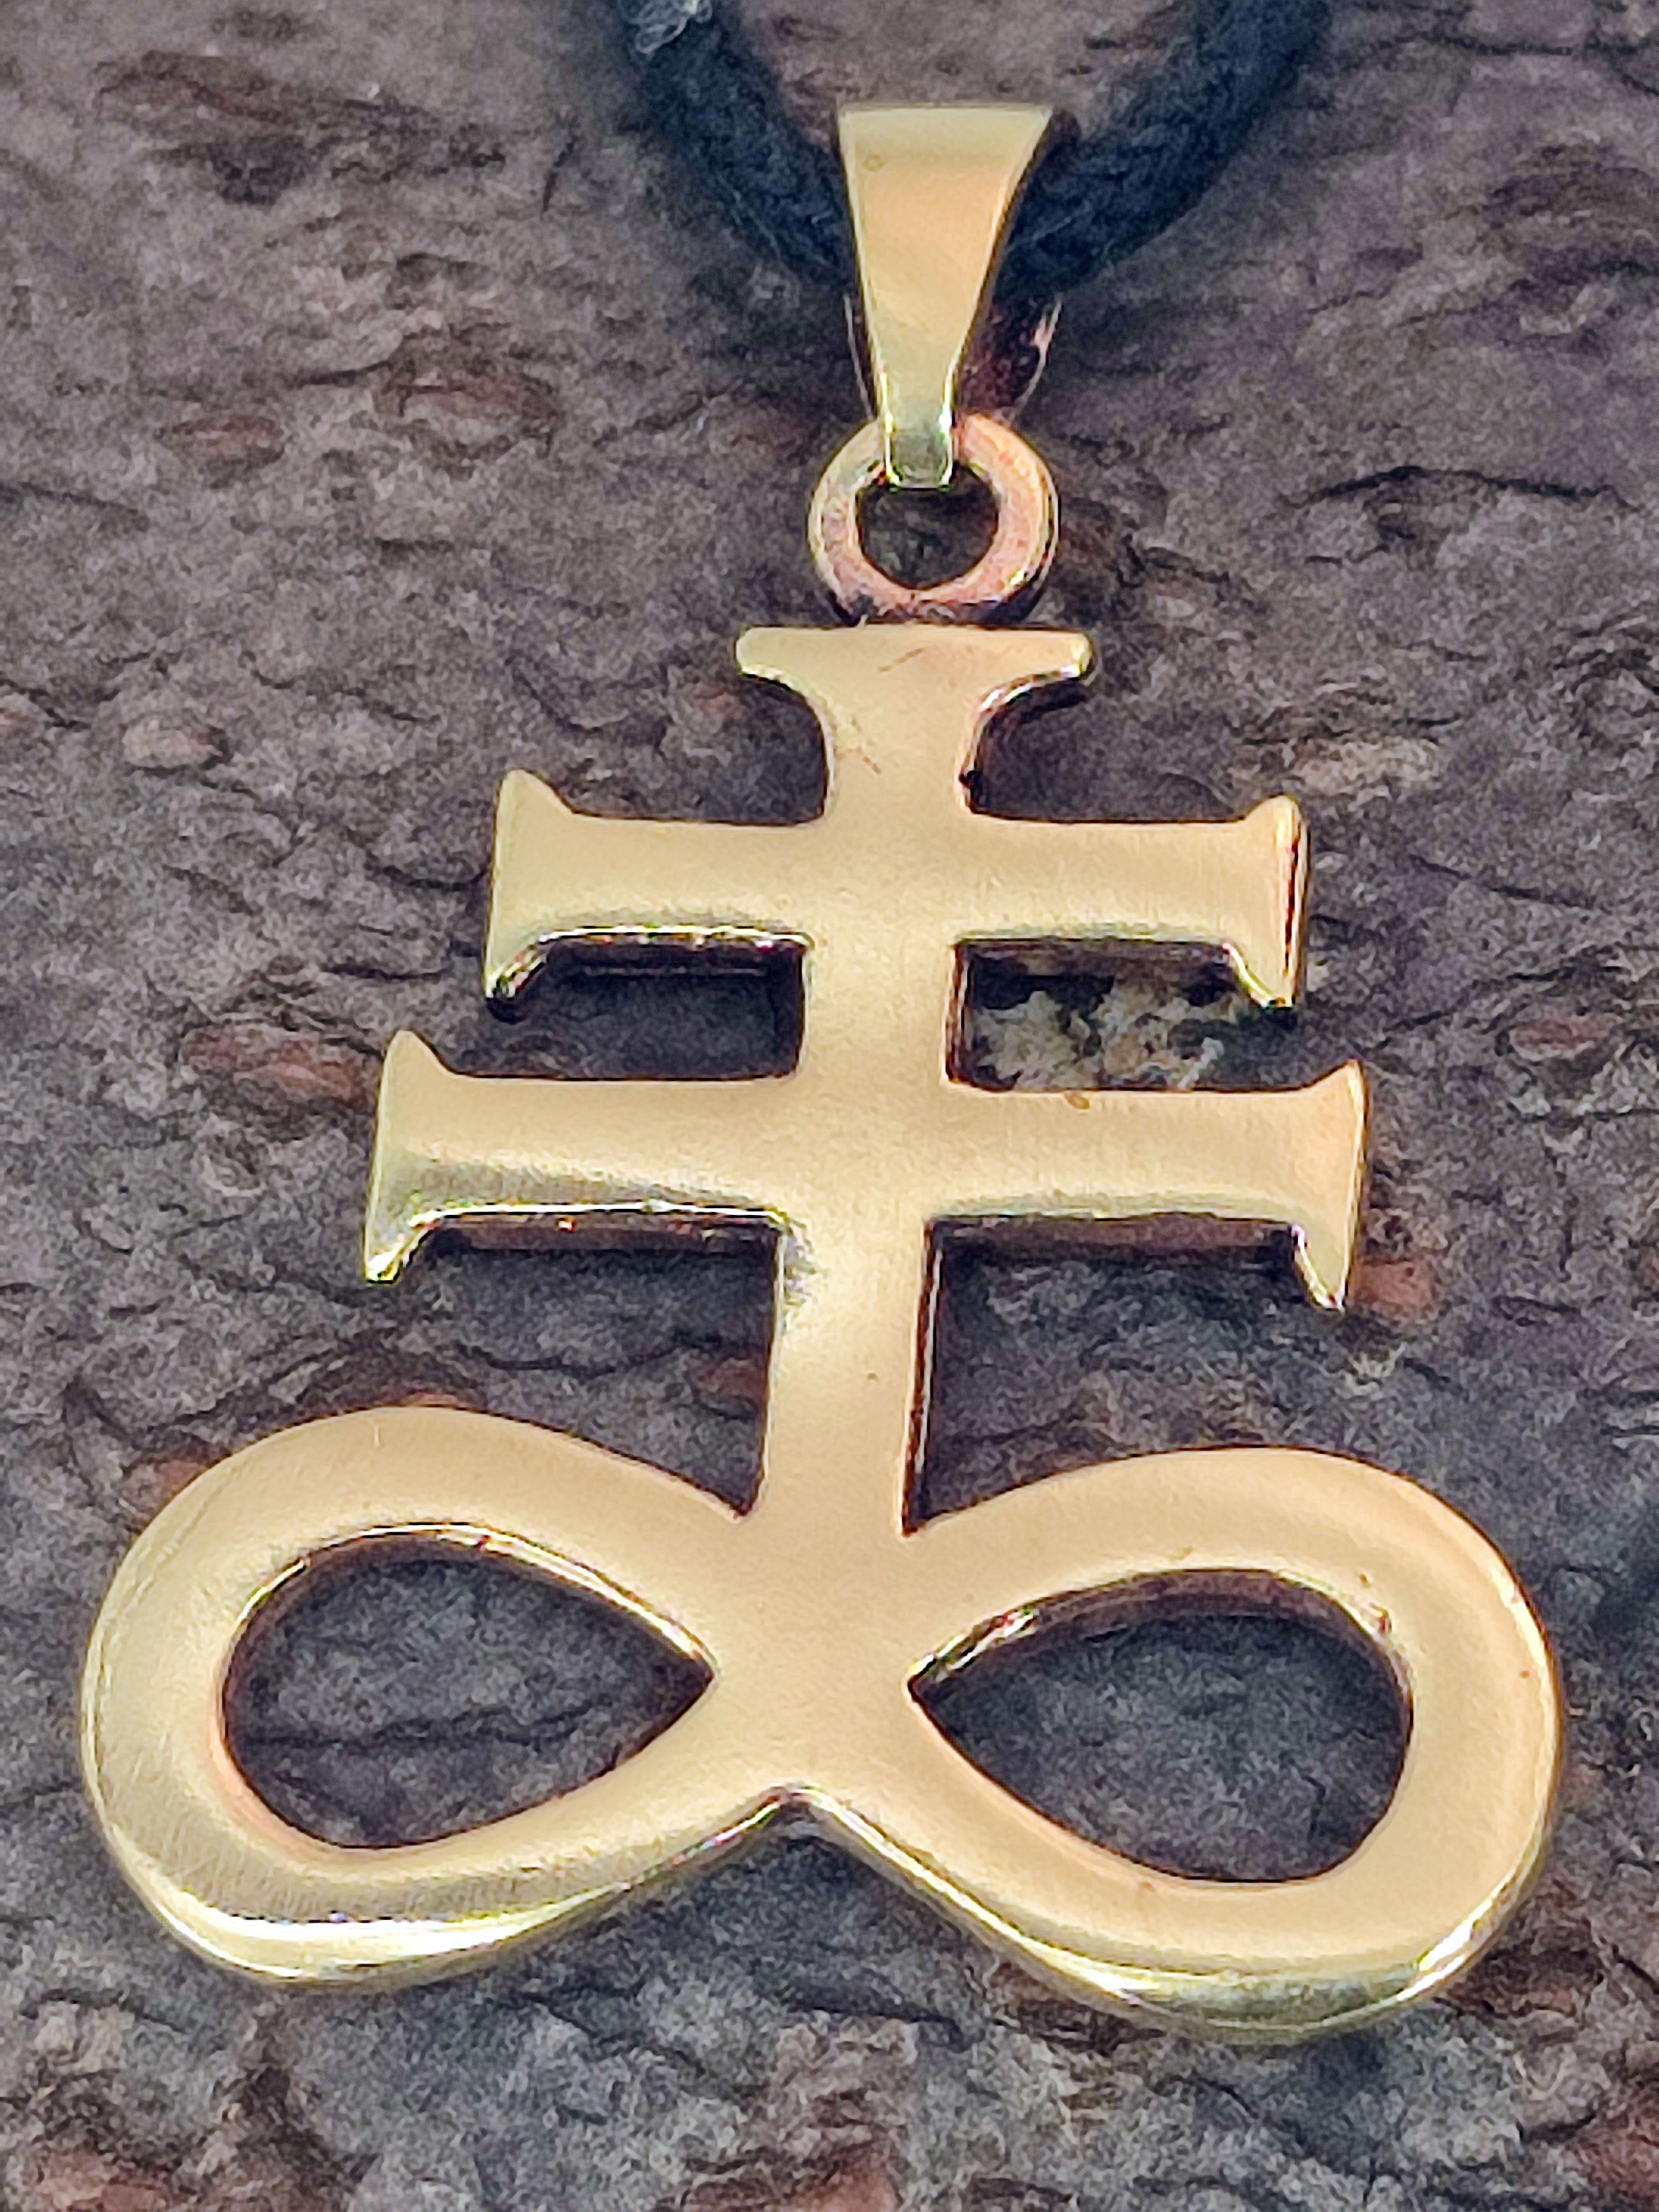 Kreuz Leviathan Leather Symbol Anhänger Satanskreuz of Bronze Kiss Nr. 165 Kettenanhänger Schwefel